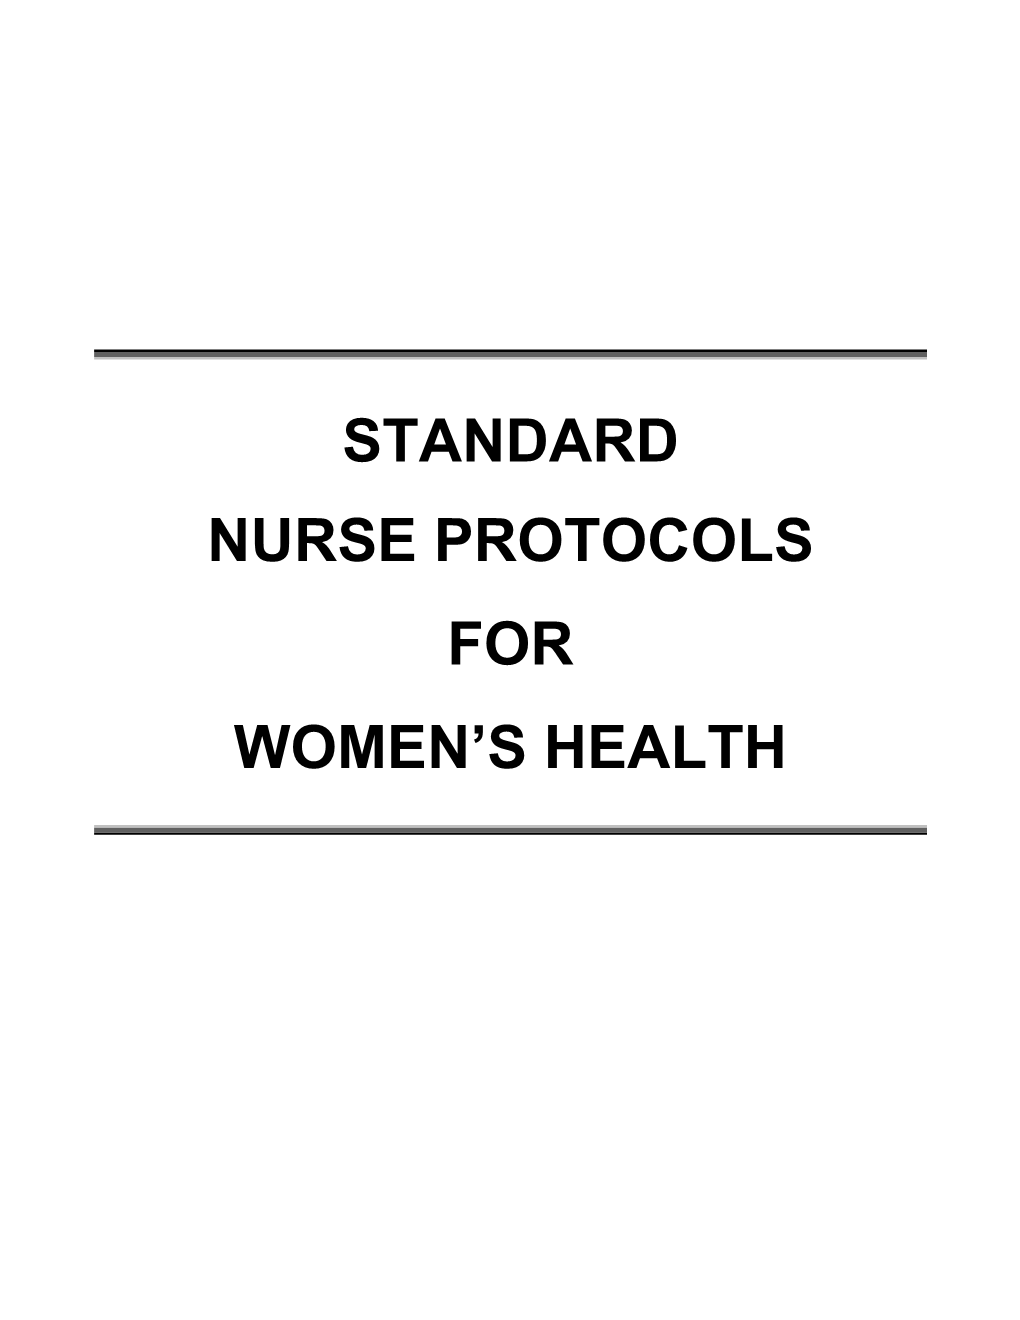 Standard Nurse Protocols for Women's Health